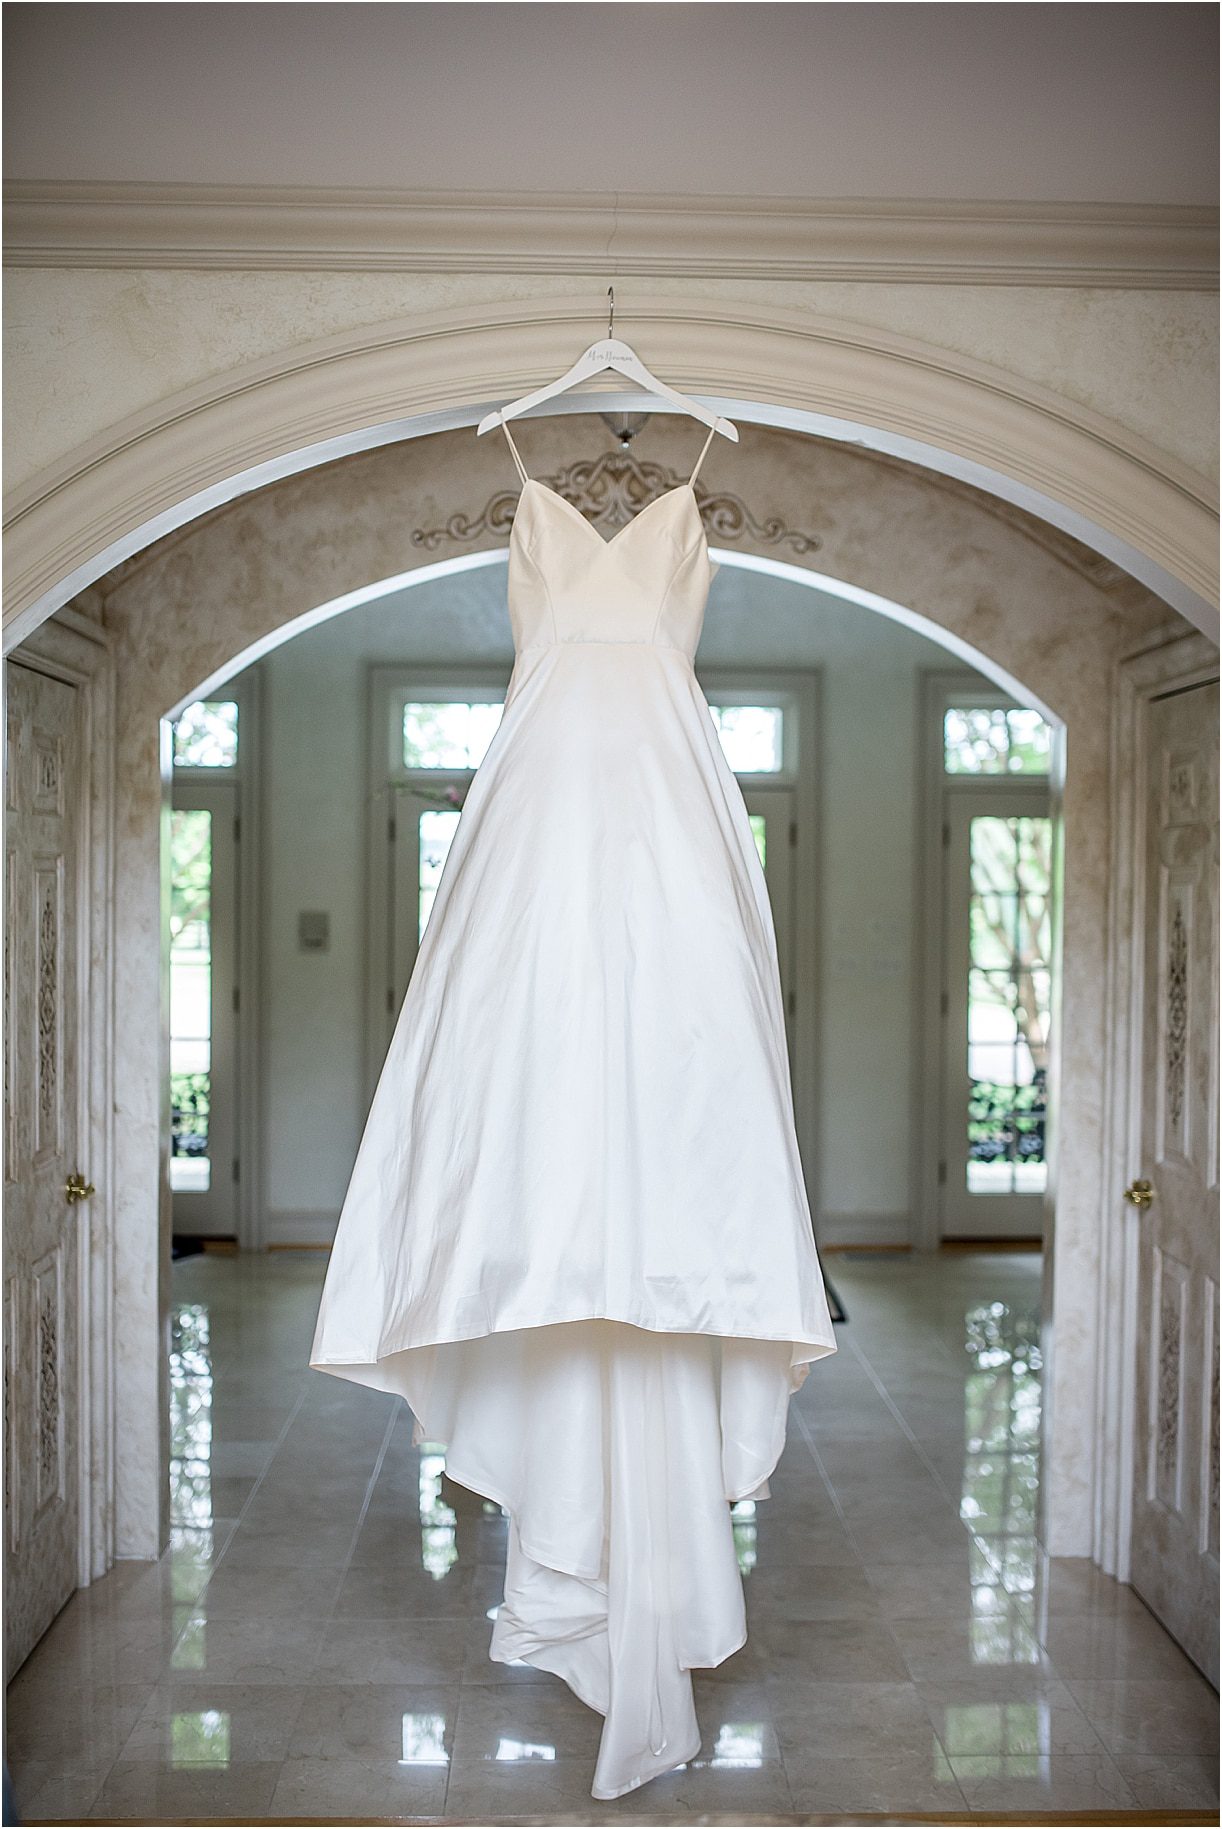 Gown Hanging | Drive In Wedding Ideas | COVID Wedding Ceremony Ideas | Hill City Bride Virginia Weddings